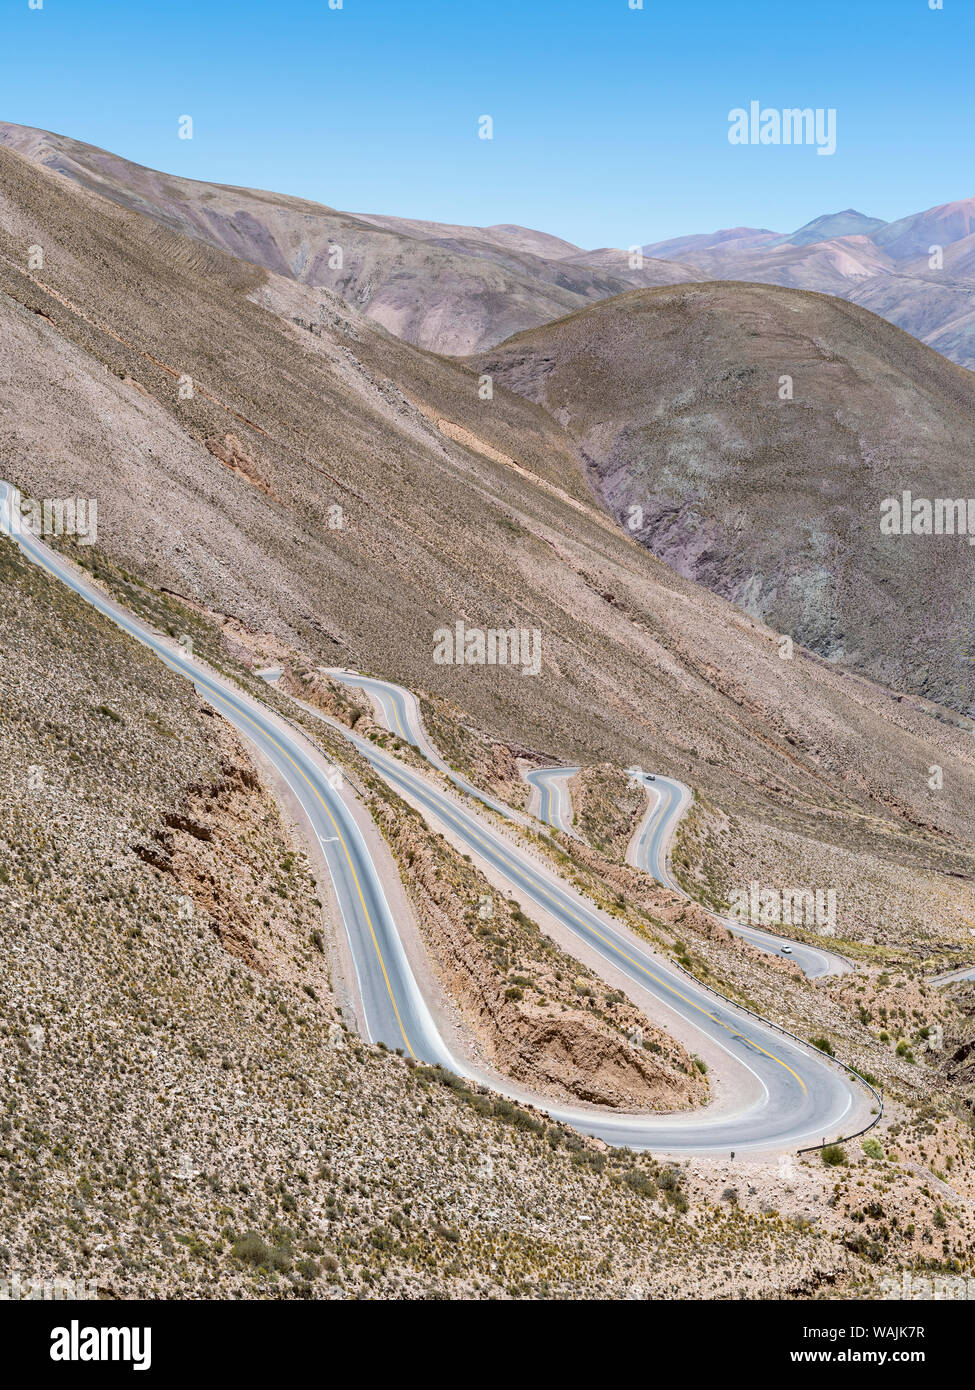 National Road RN 52, the mountain road Cuesta del Lipan climbing up to Abra de Potrerillos, Argentina. Stock Photo